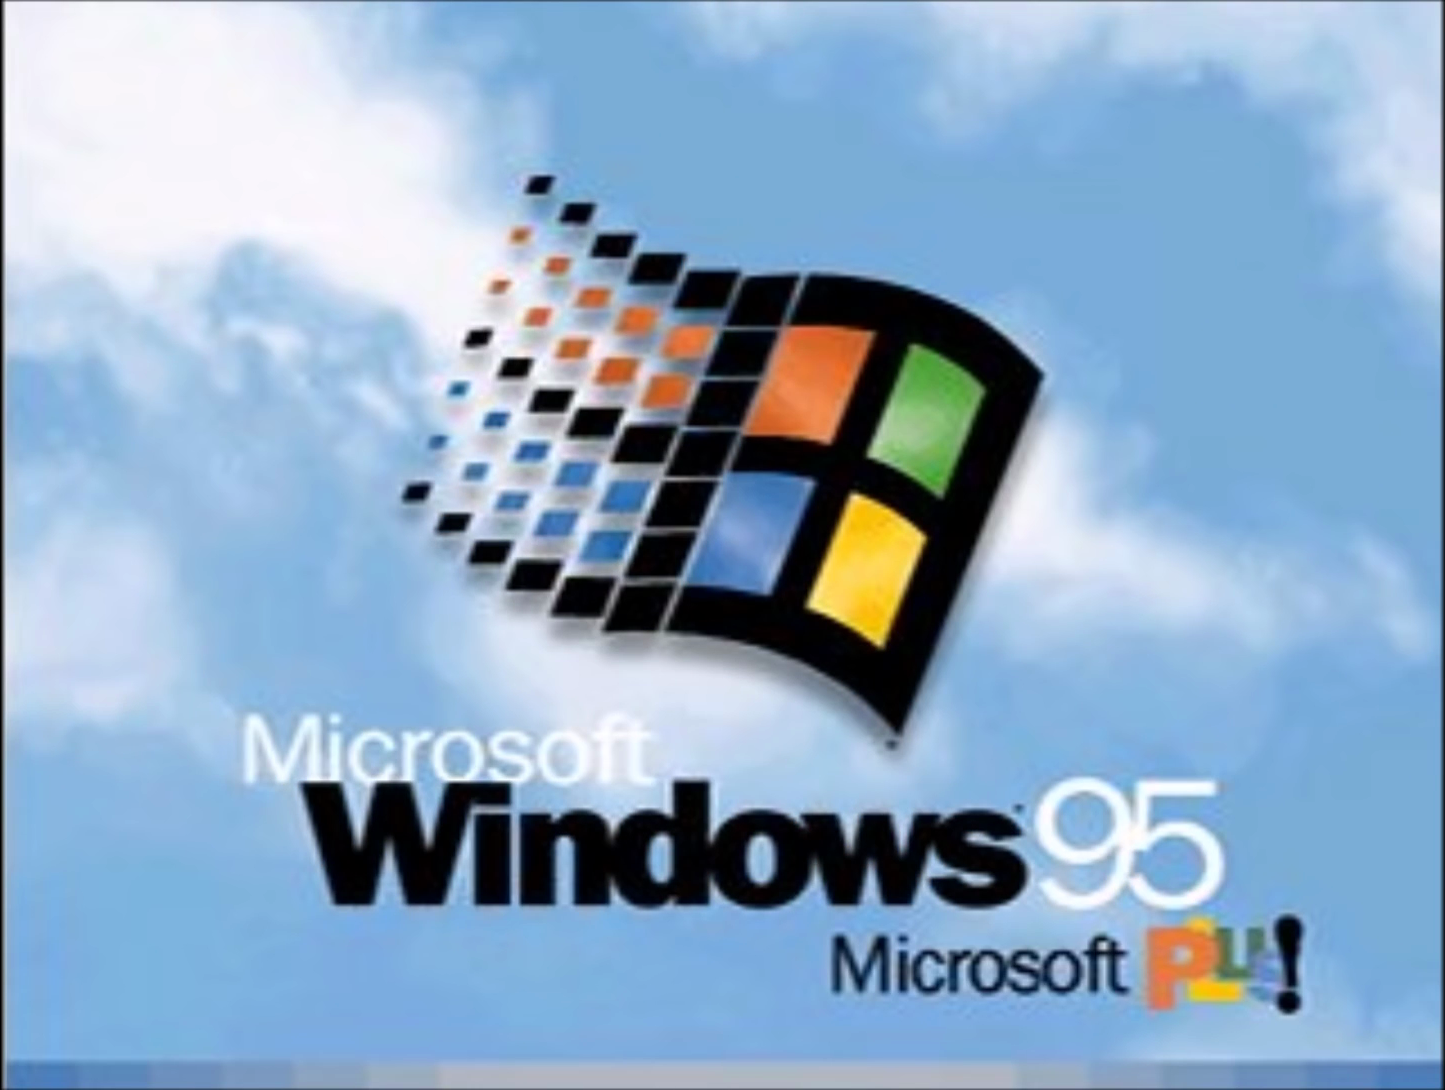 Windows 95 (Microsoft Plus" variant) splash screen